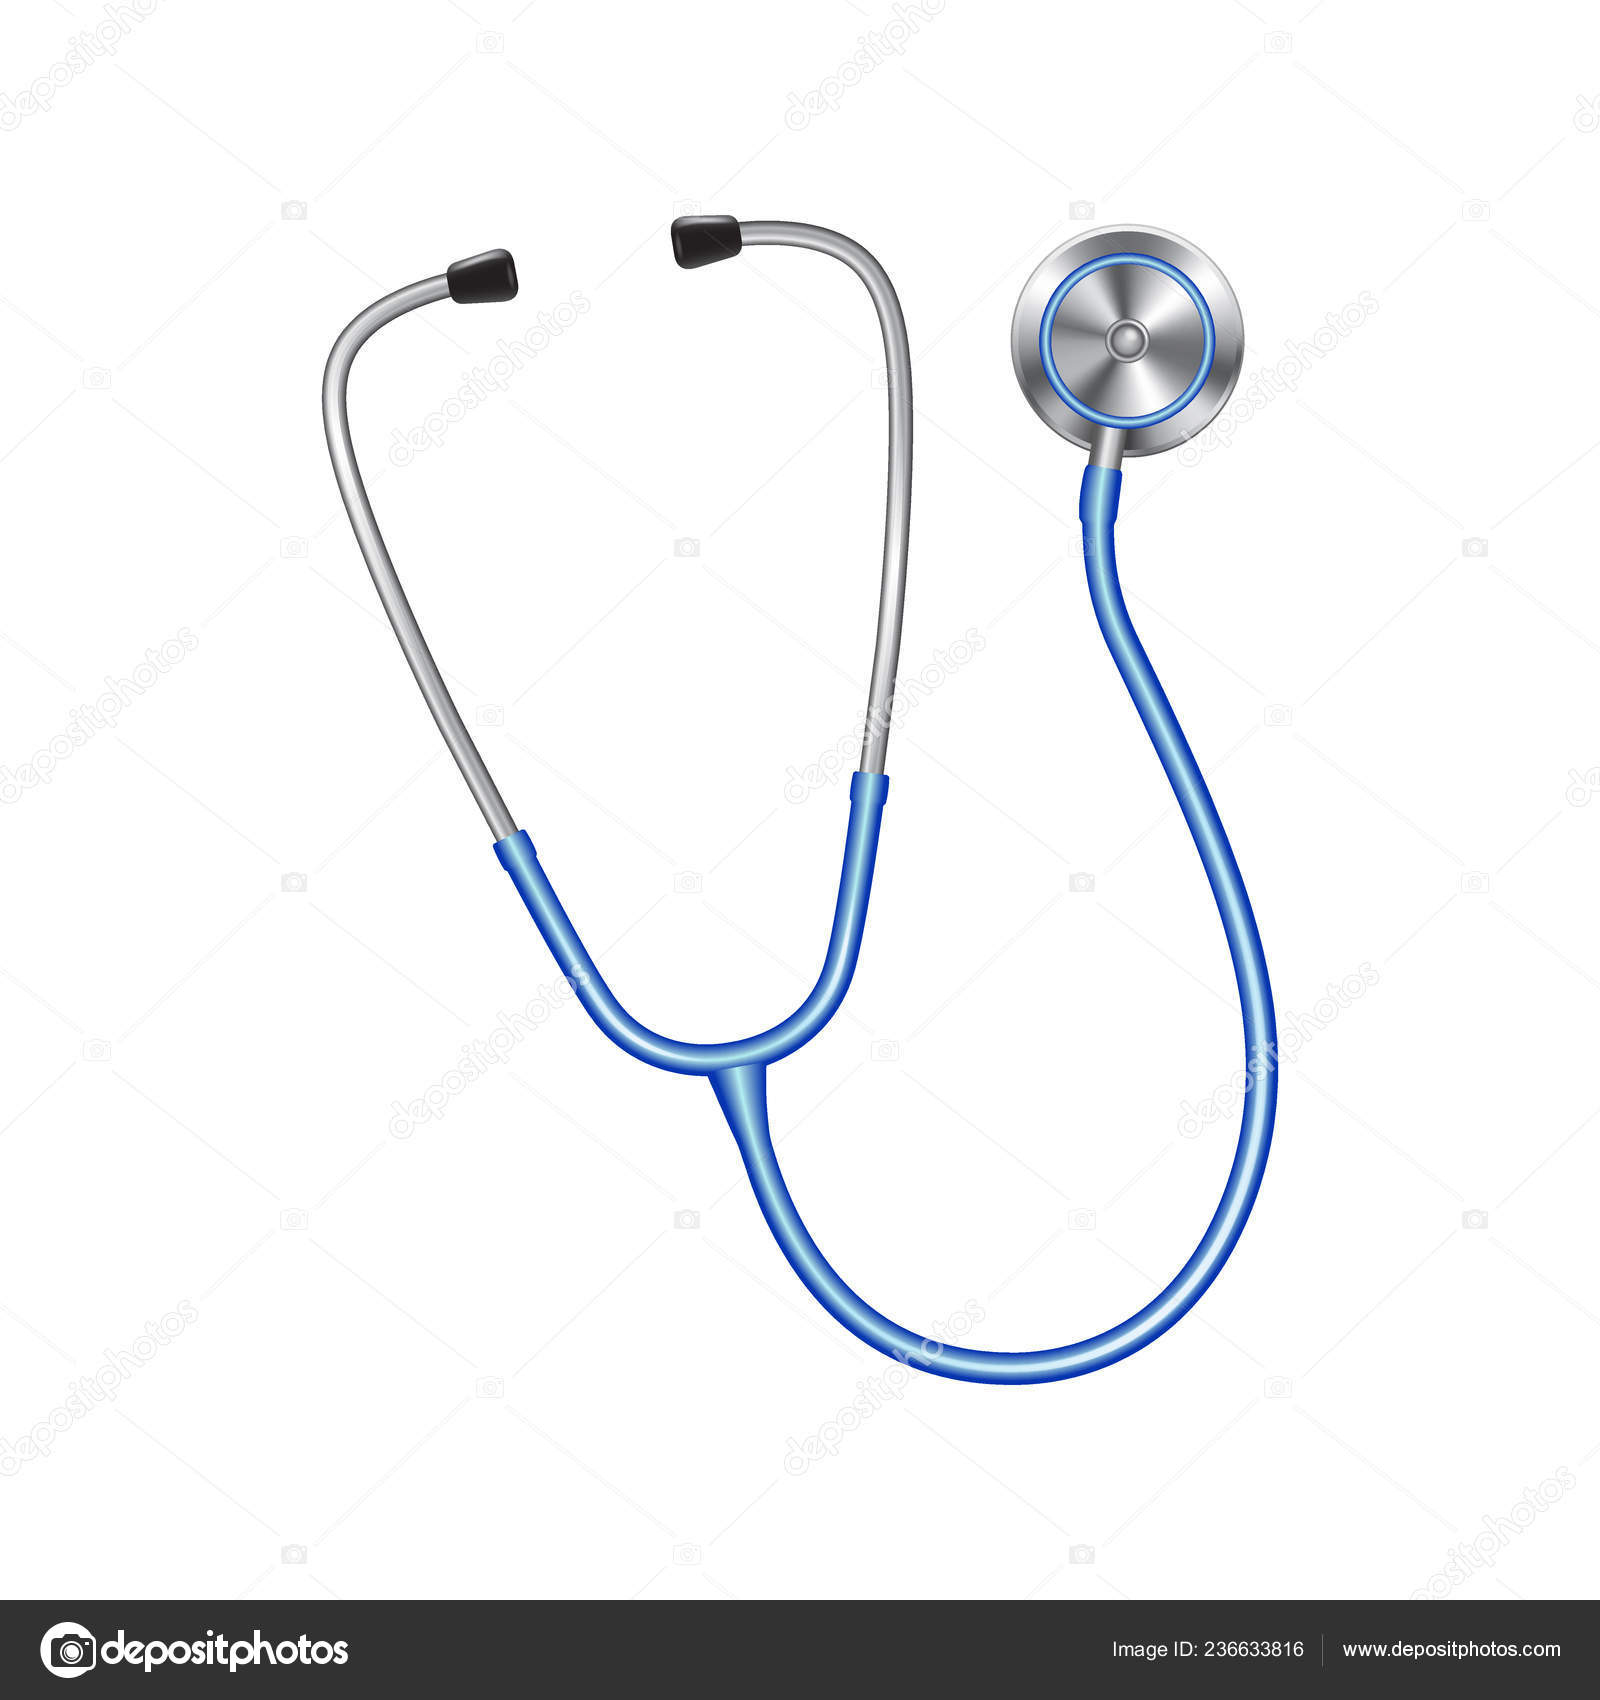 https://st4.depositphotos.com/1998781/23663/v/1600/depositphotos_236633816-stock-illustration-colored-stethoscope-icon-medical-equipment.jpg